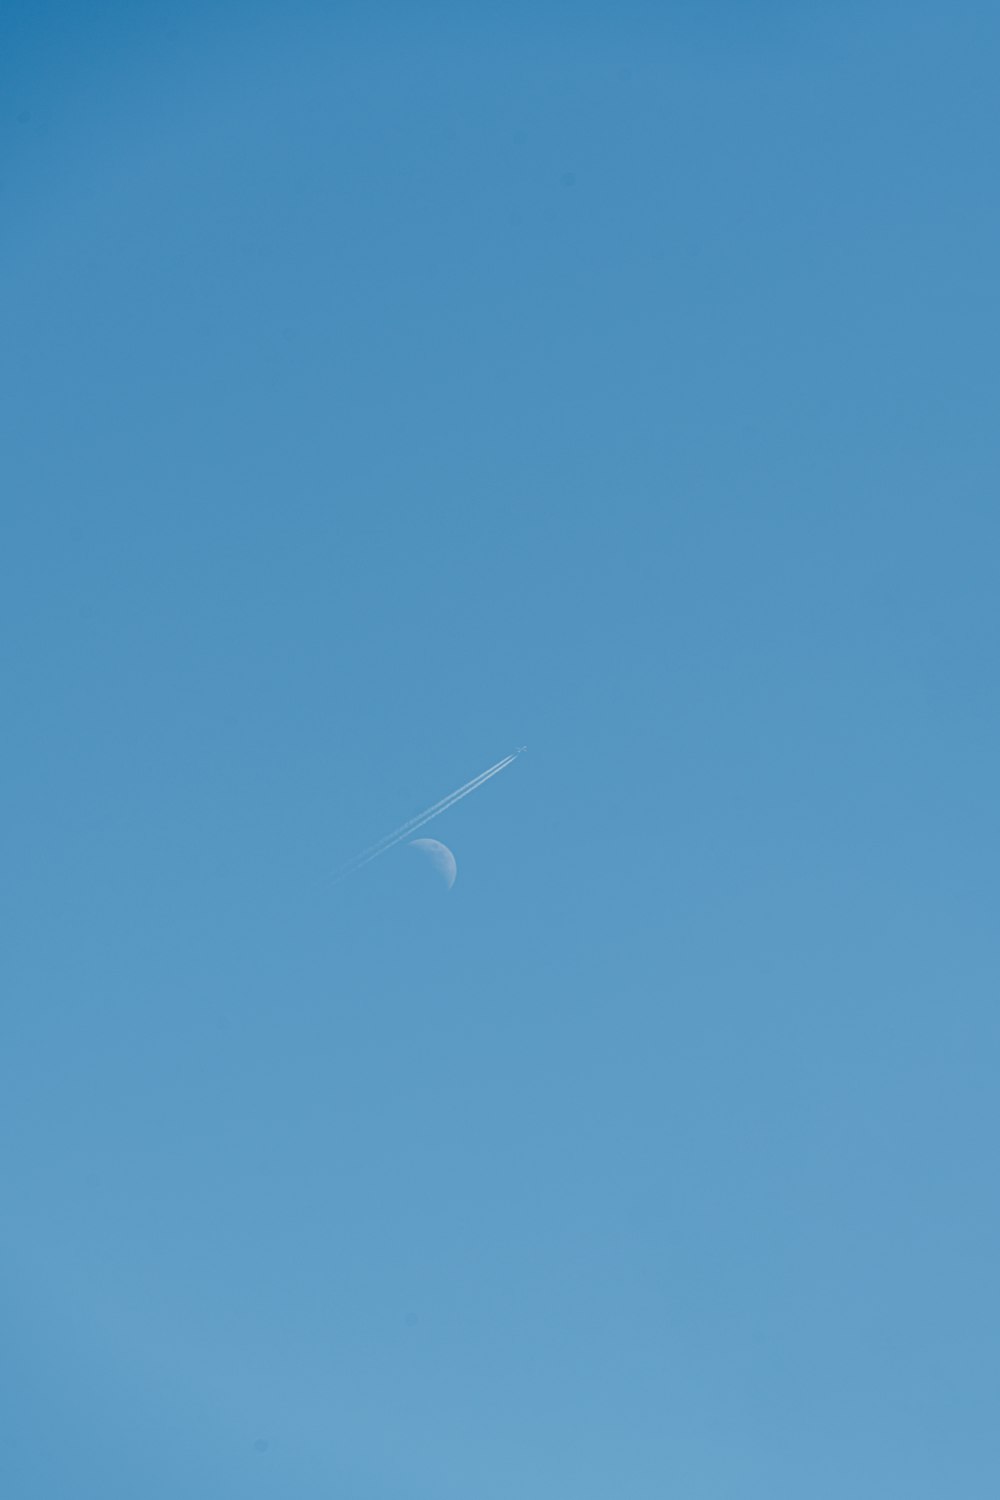 Un avión volando en un cielo azul claro